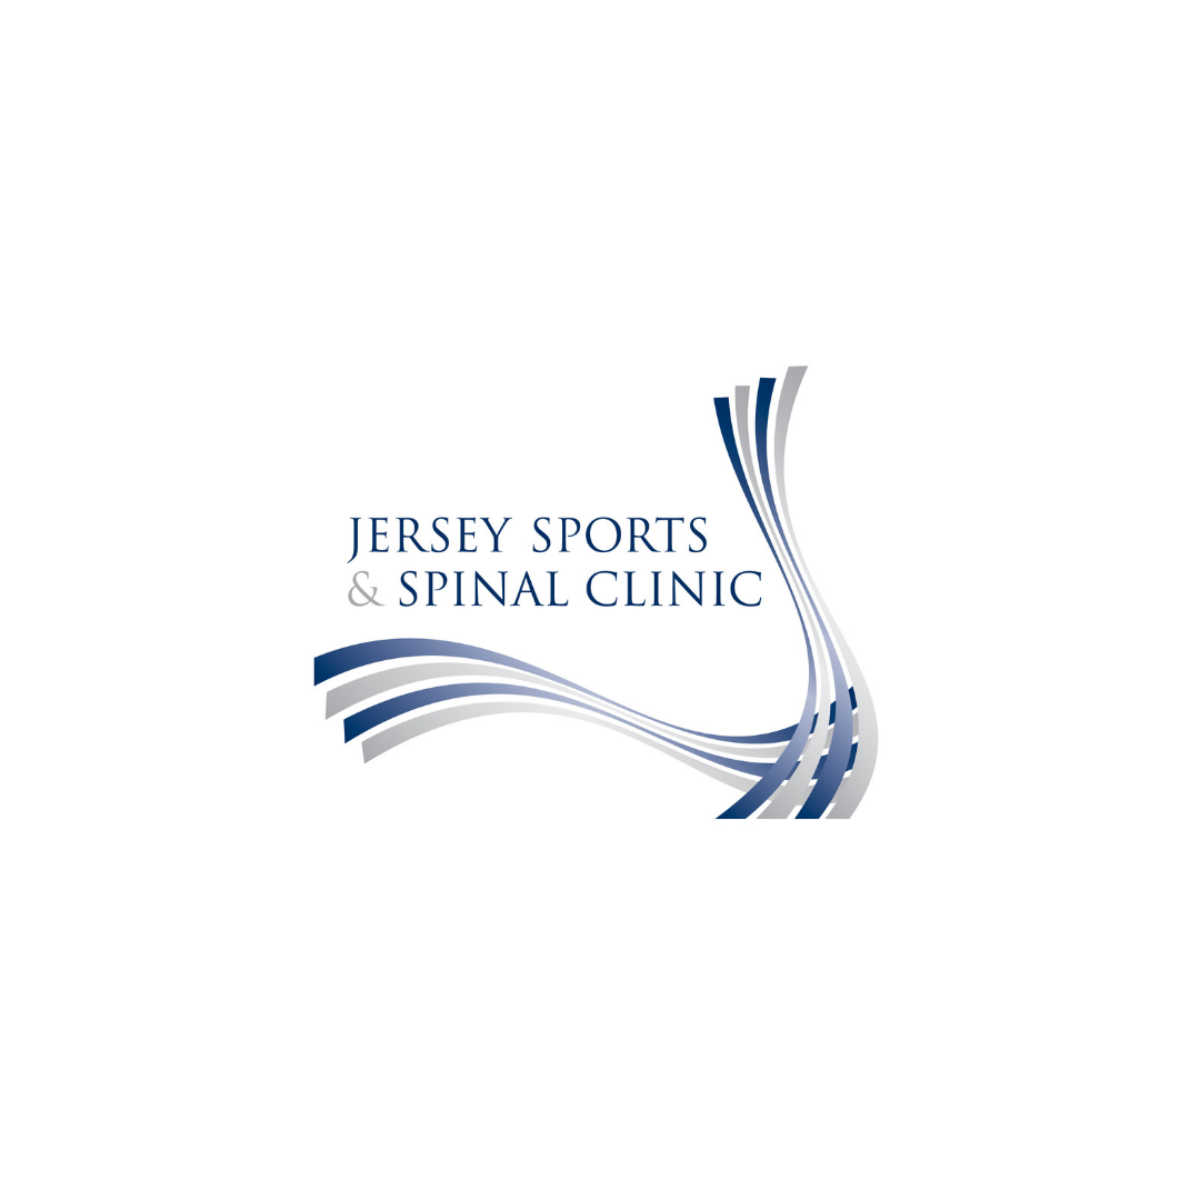 Jersey Sports & Spinal Clinic CareTech Matchmaking